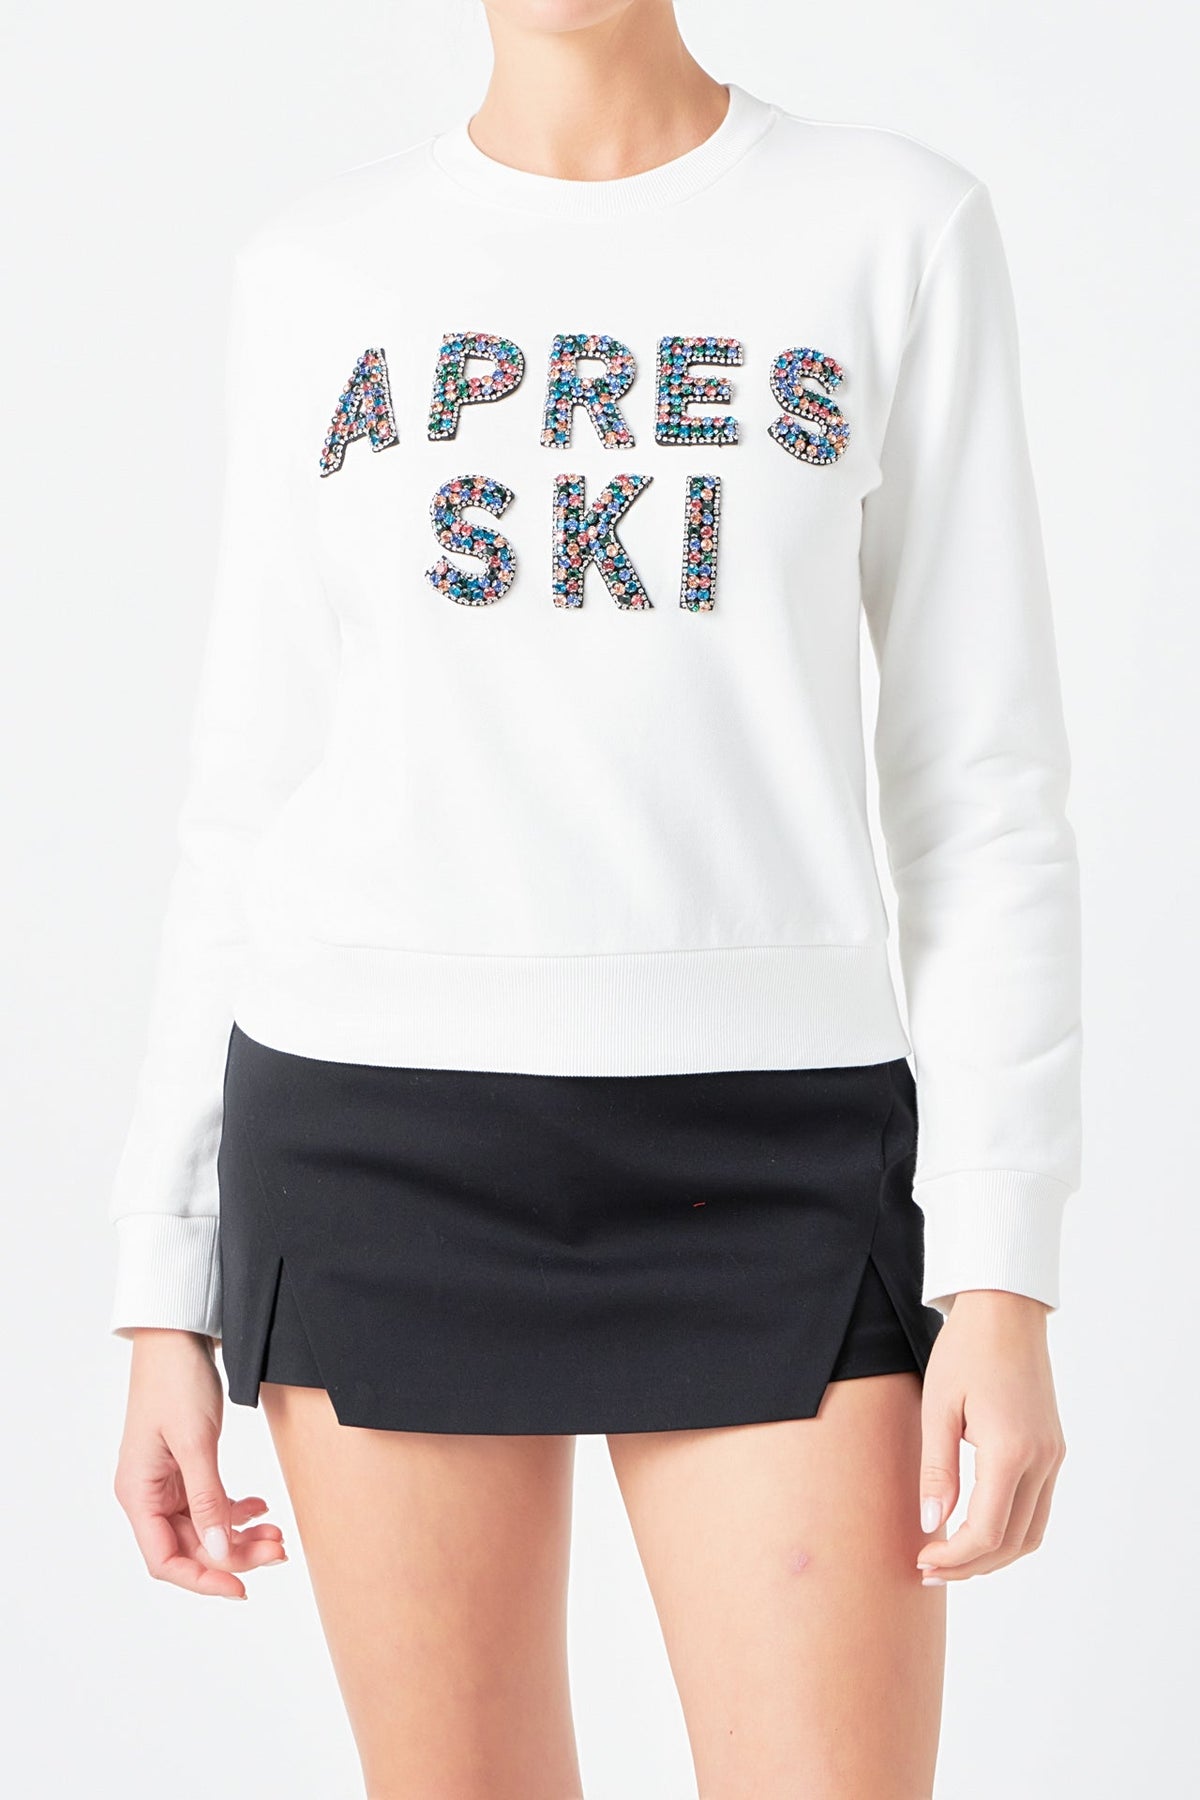 ENDLESS ROSE - Apres Ski Embellished Sweatshirt - HOODIES & SWEATSHIRTS available at Objectrare